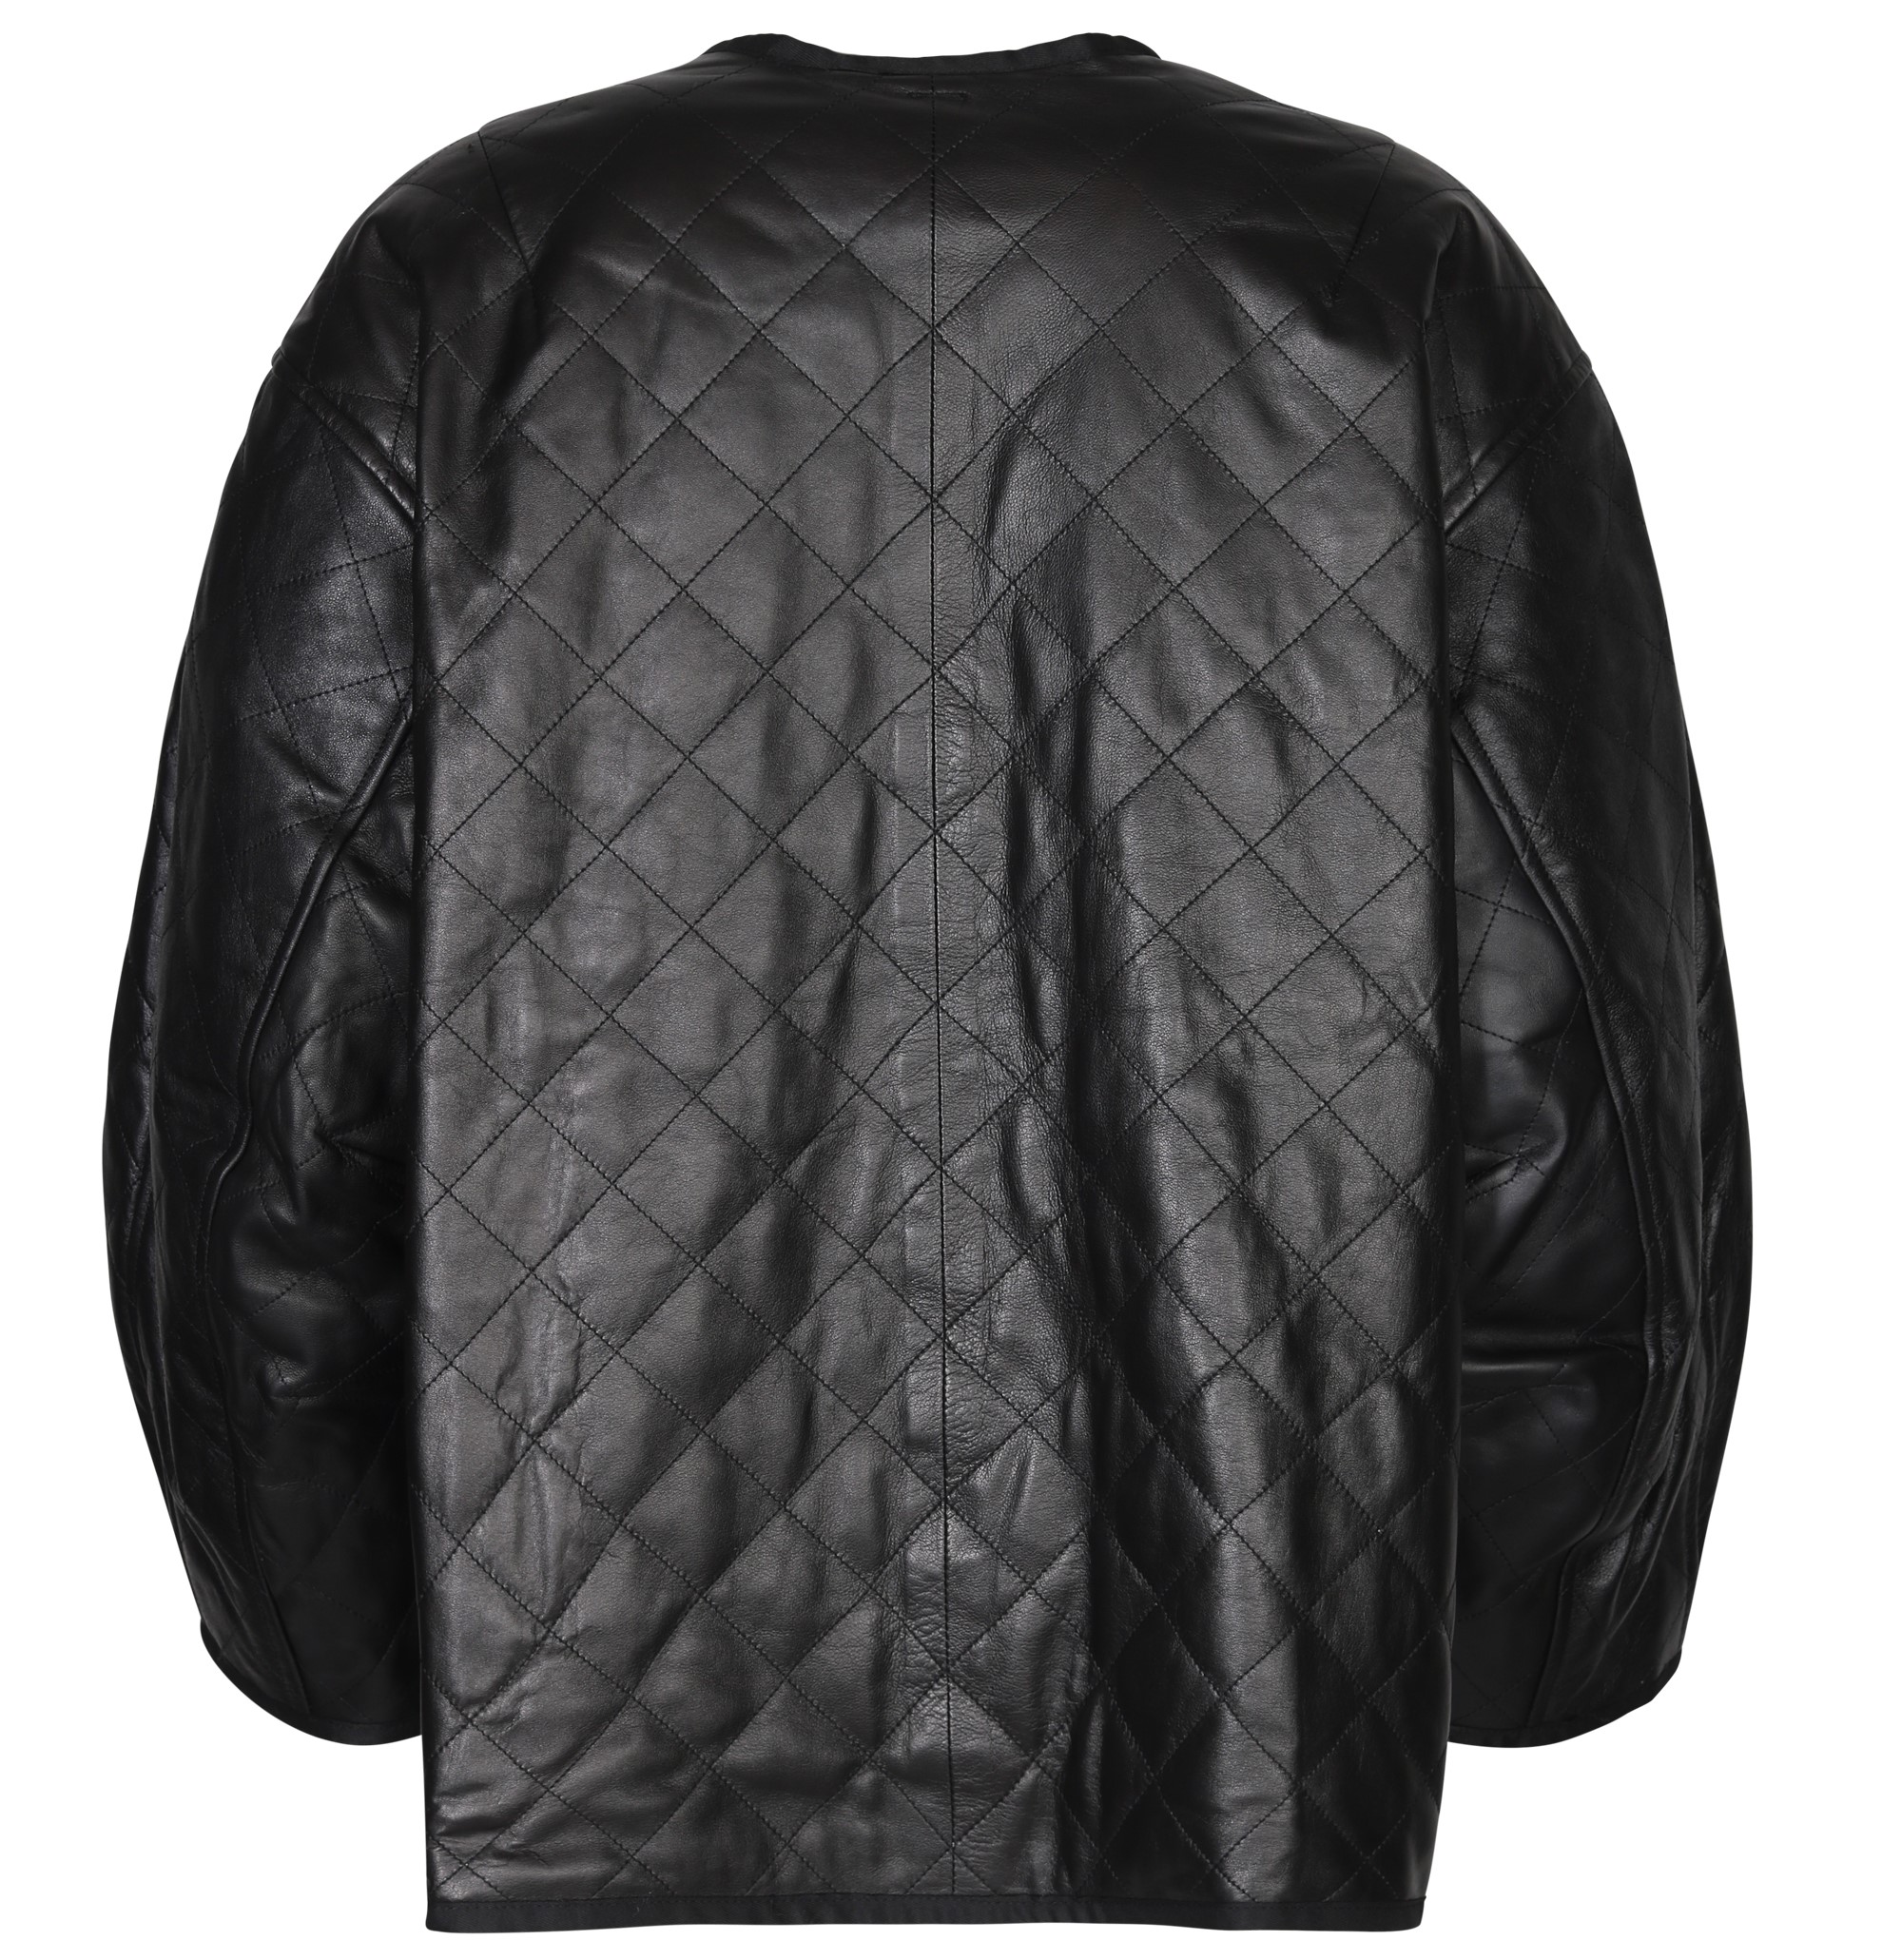 SOCIÉTÉ ANGELIQUE Mira Padded Leather Vest in Black S